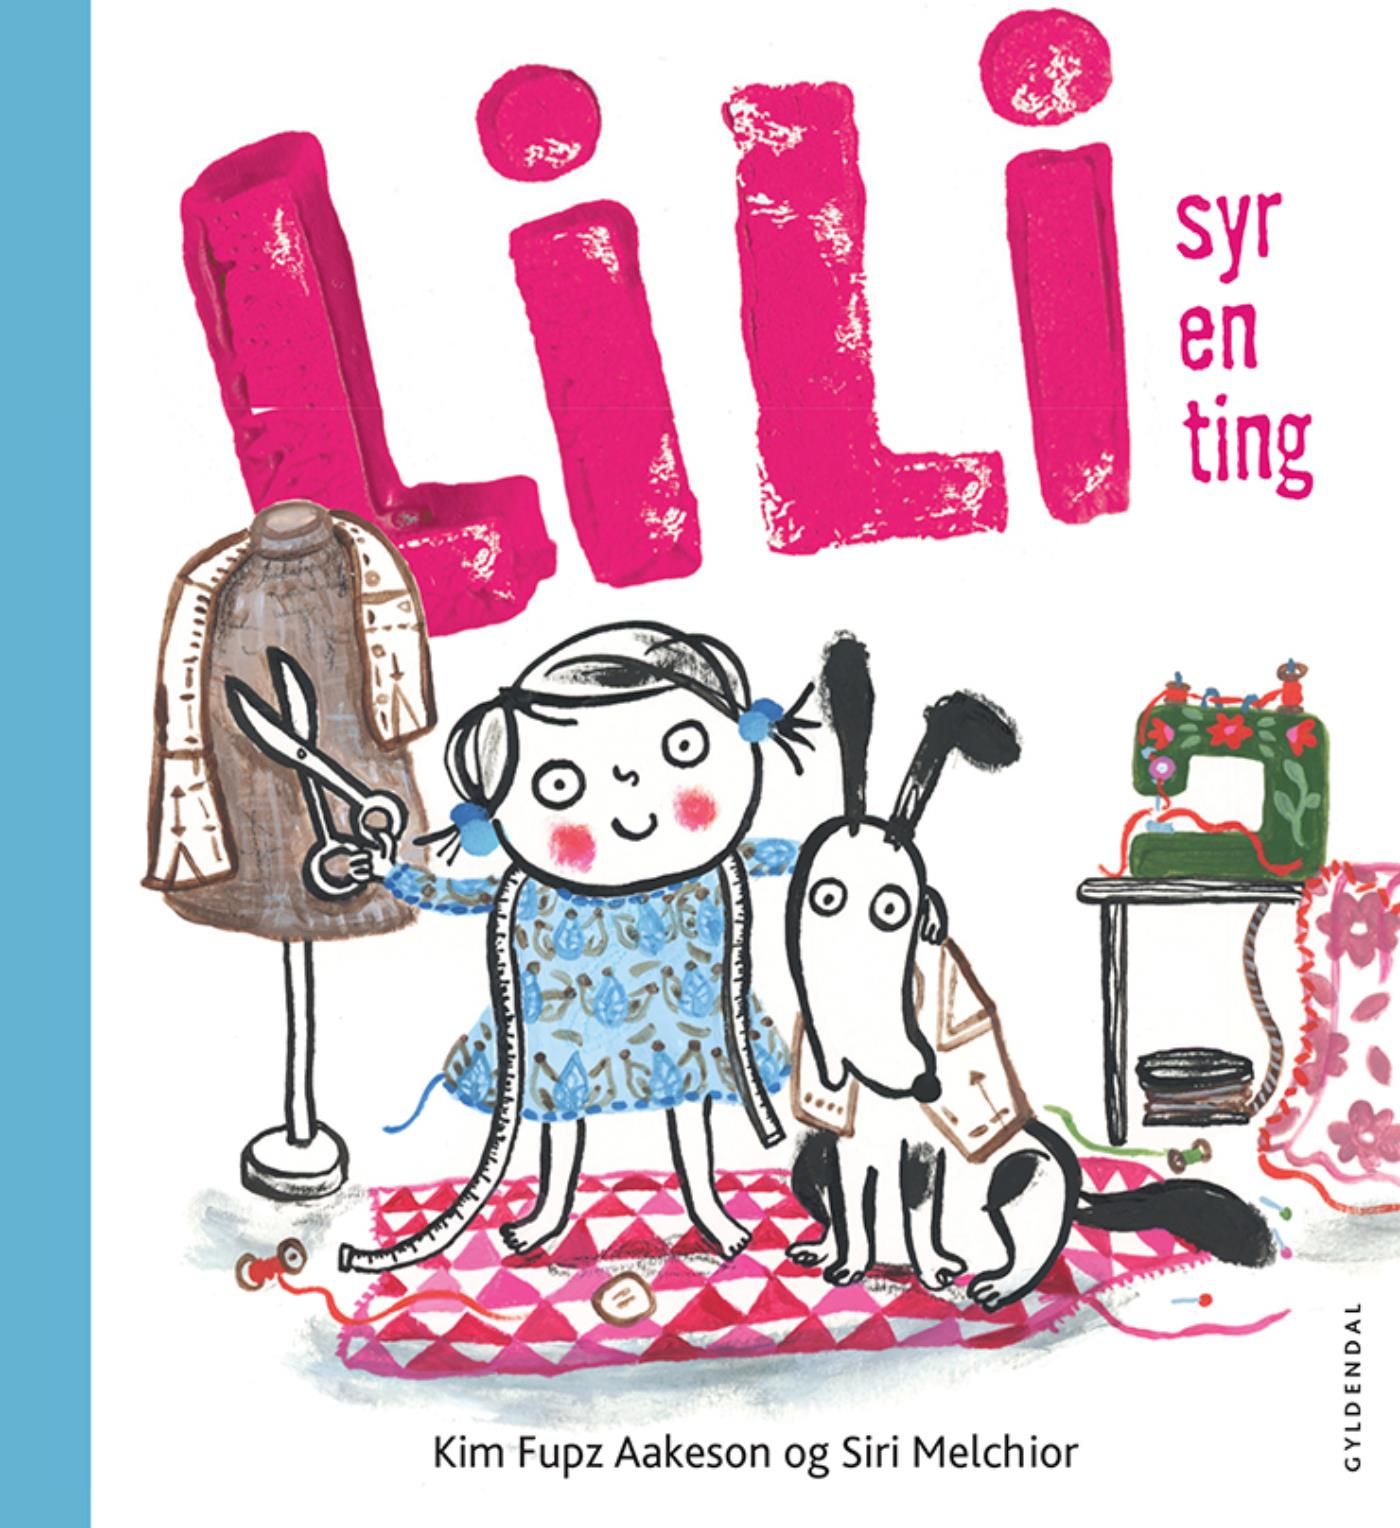 Lili syr en ting - Lyt&læs, e-bok av Siri Melchior, Kim Fupz Aakeson